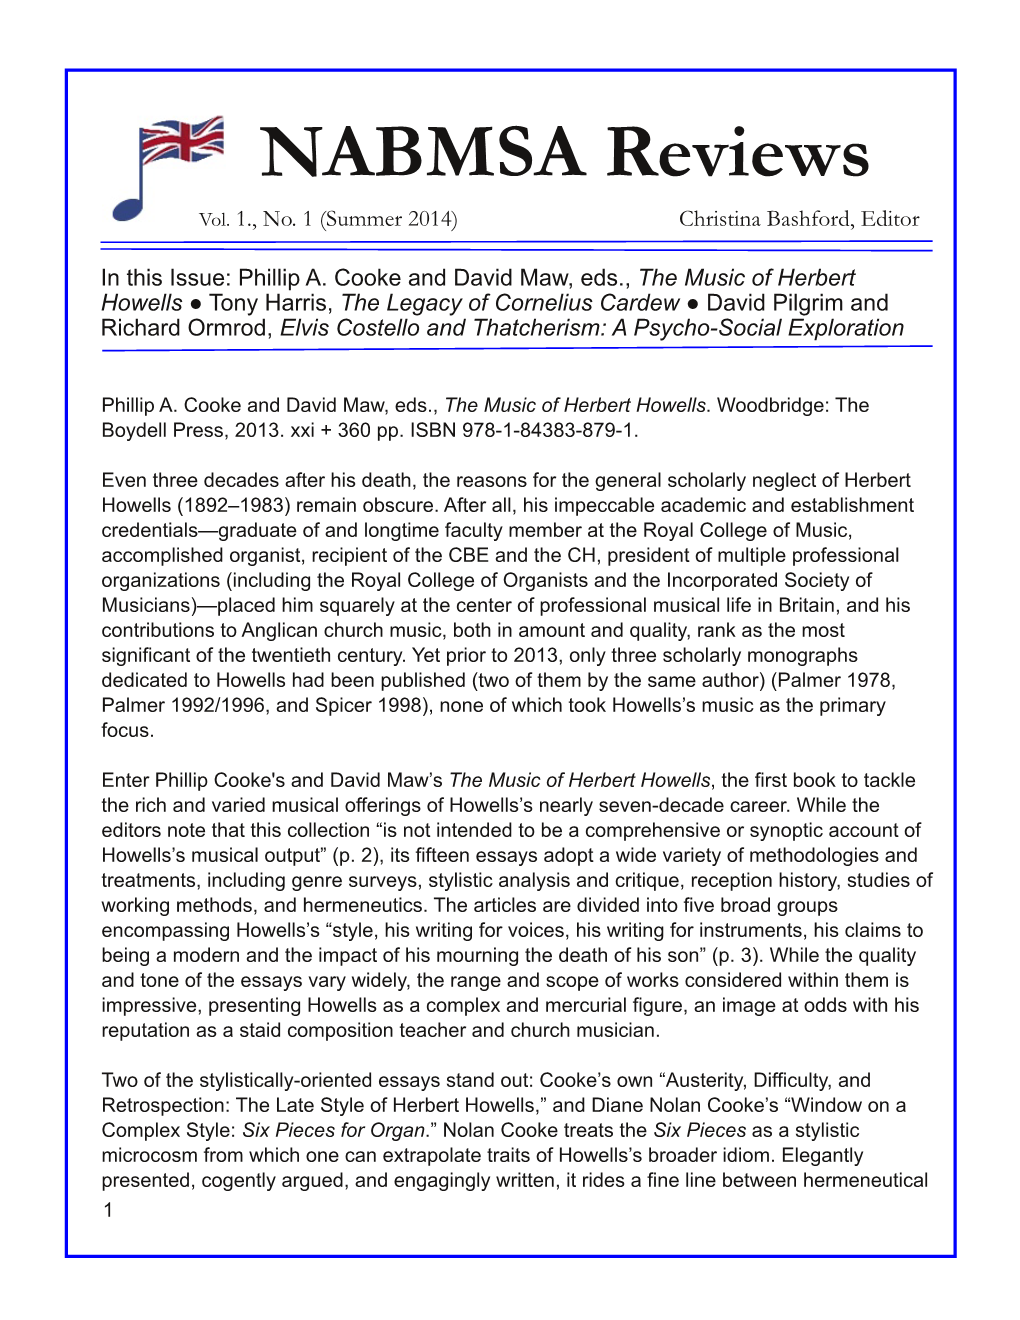 NABMSA Reviews Vol